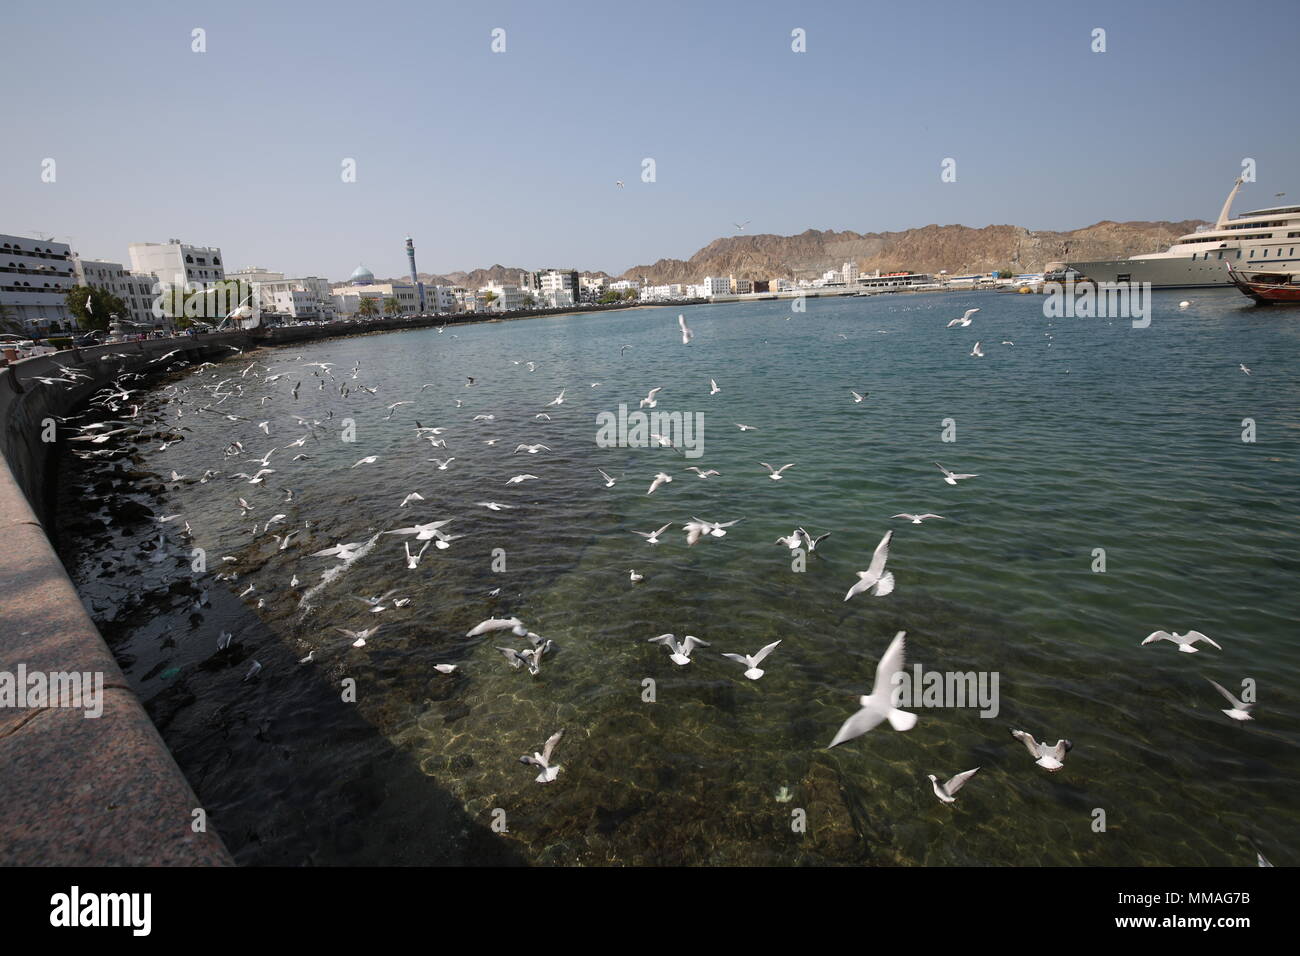 Port Sultan Qaboos - Al Lawati Mosque - Muscat - Sultanate of Oman Stock Photo